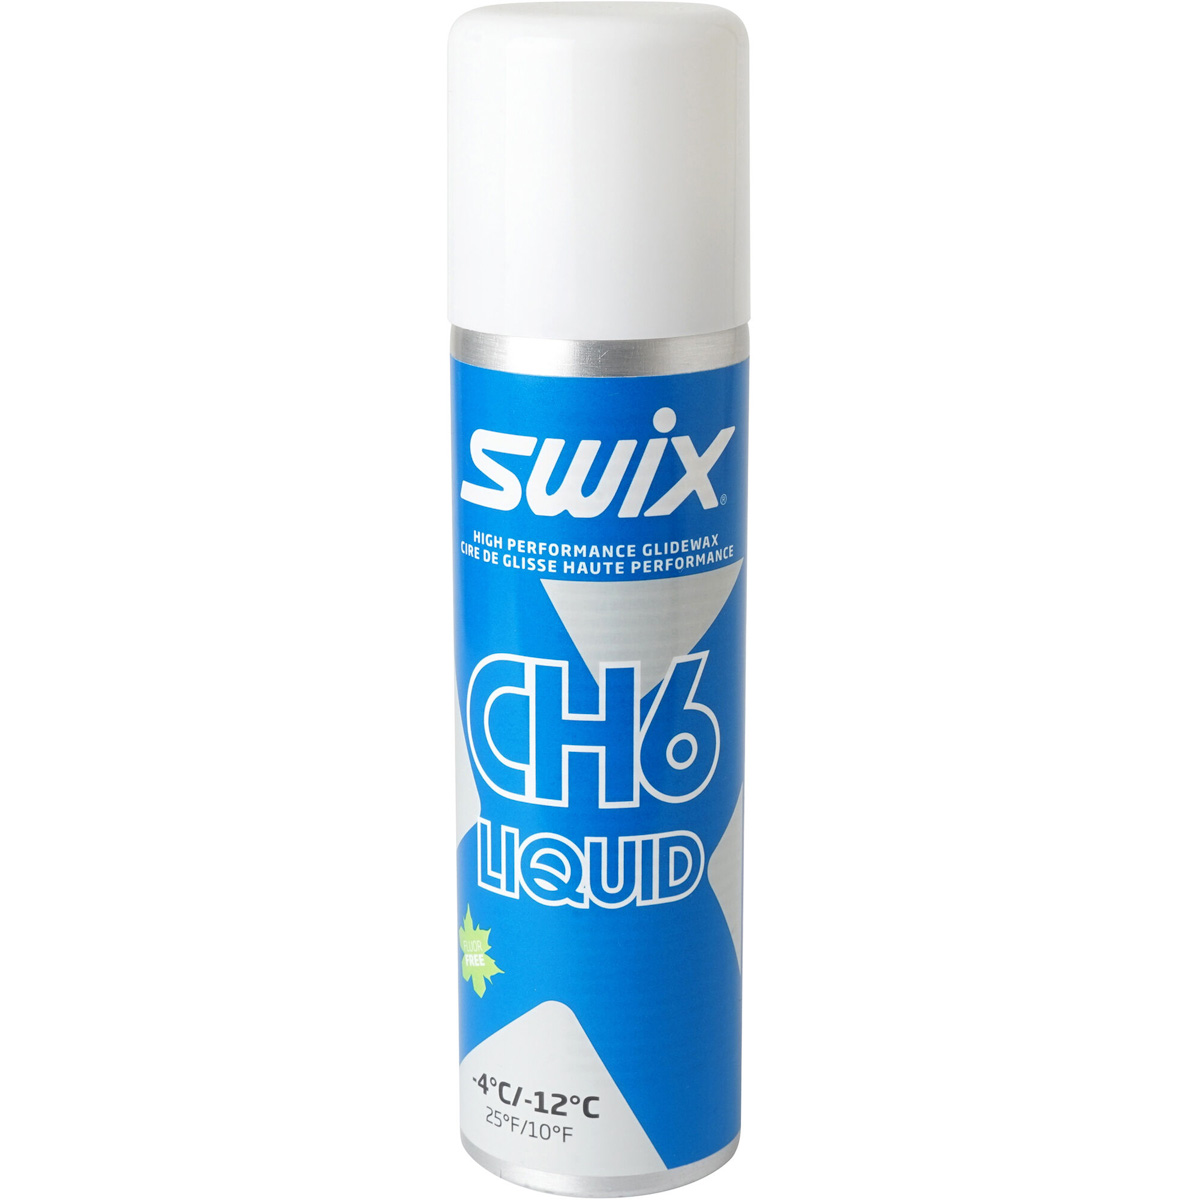 Skluzný vosk SWIX CH06XL Liquid Blue 120ml